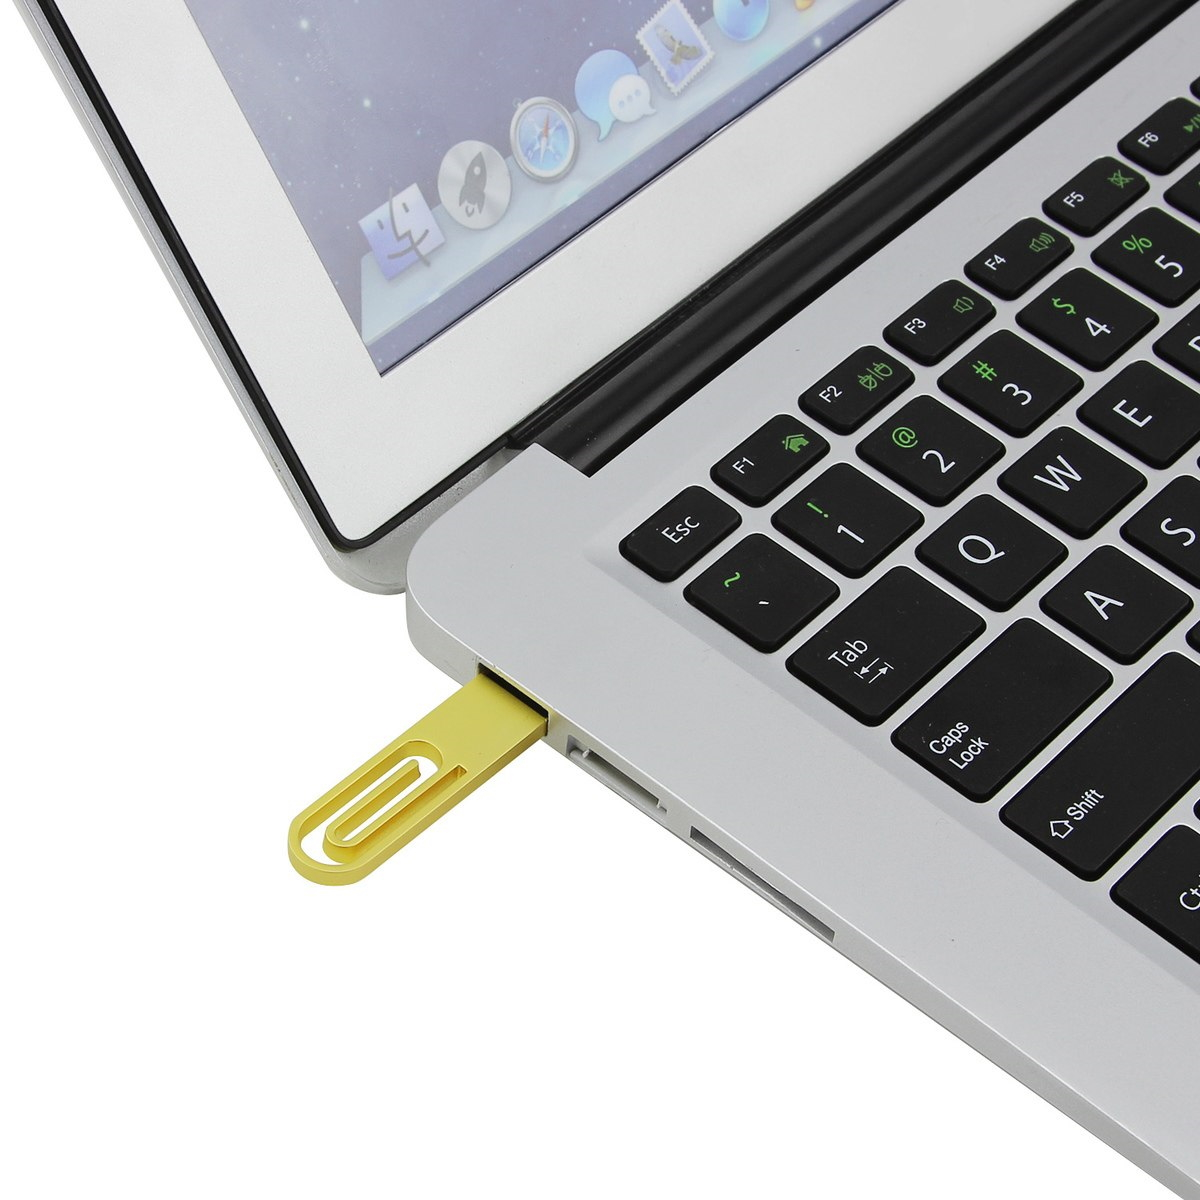 USB GERMANY ® eCLIP USB-Stick (Weiß, 64 GB)